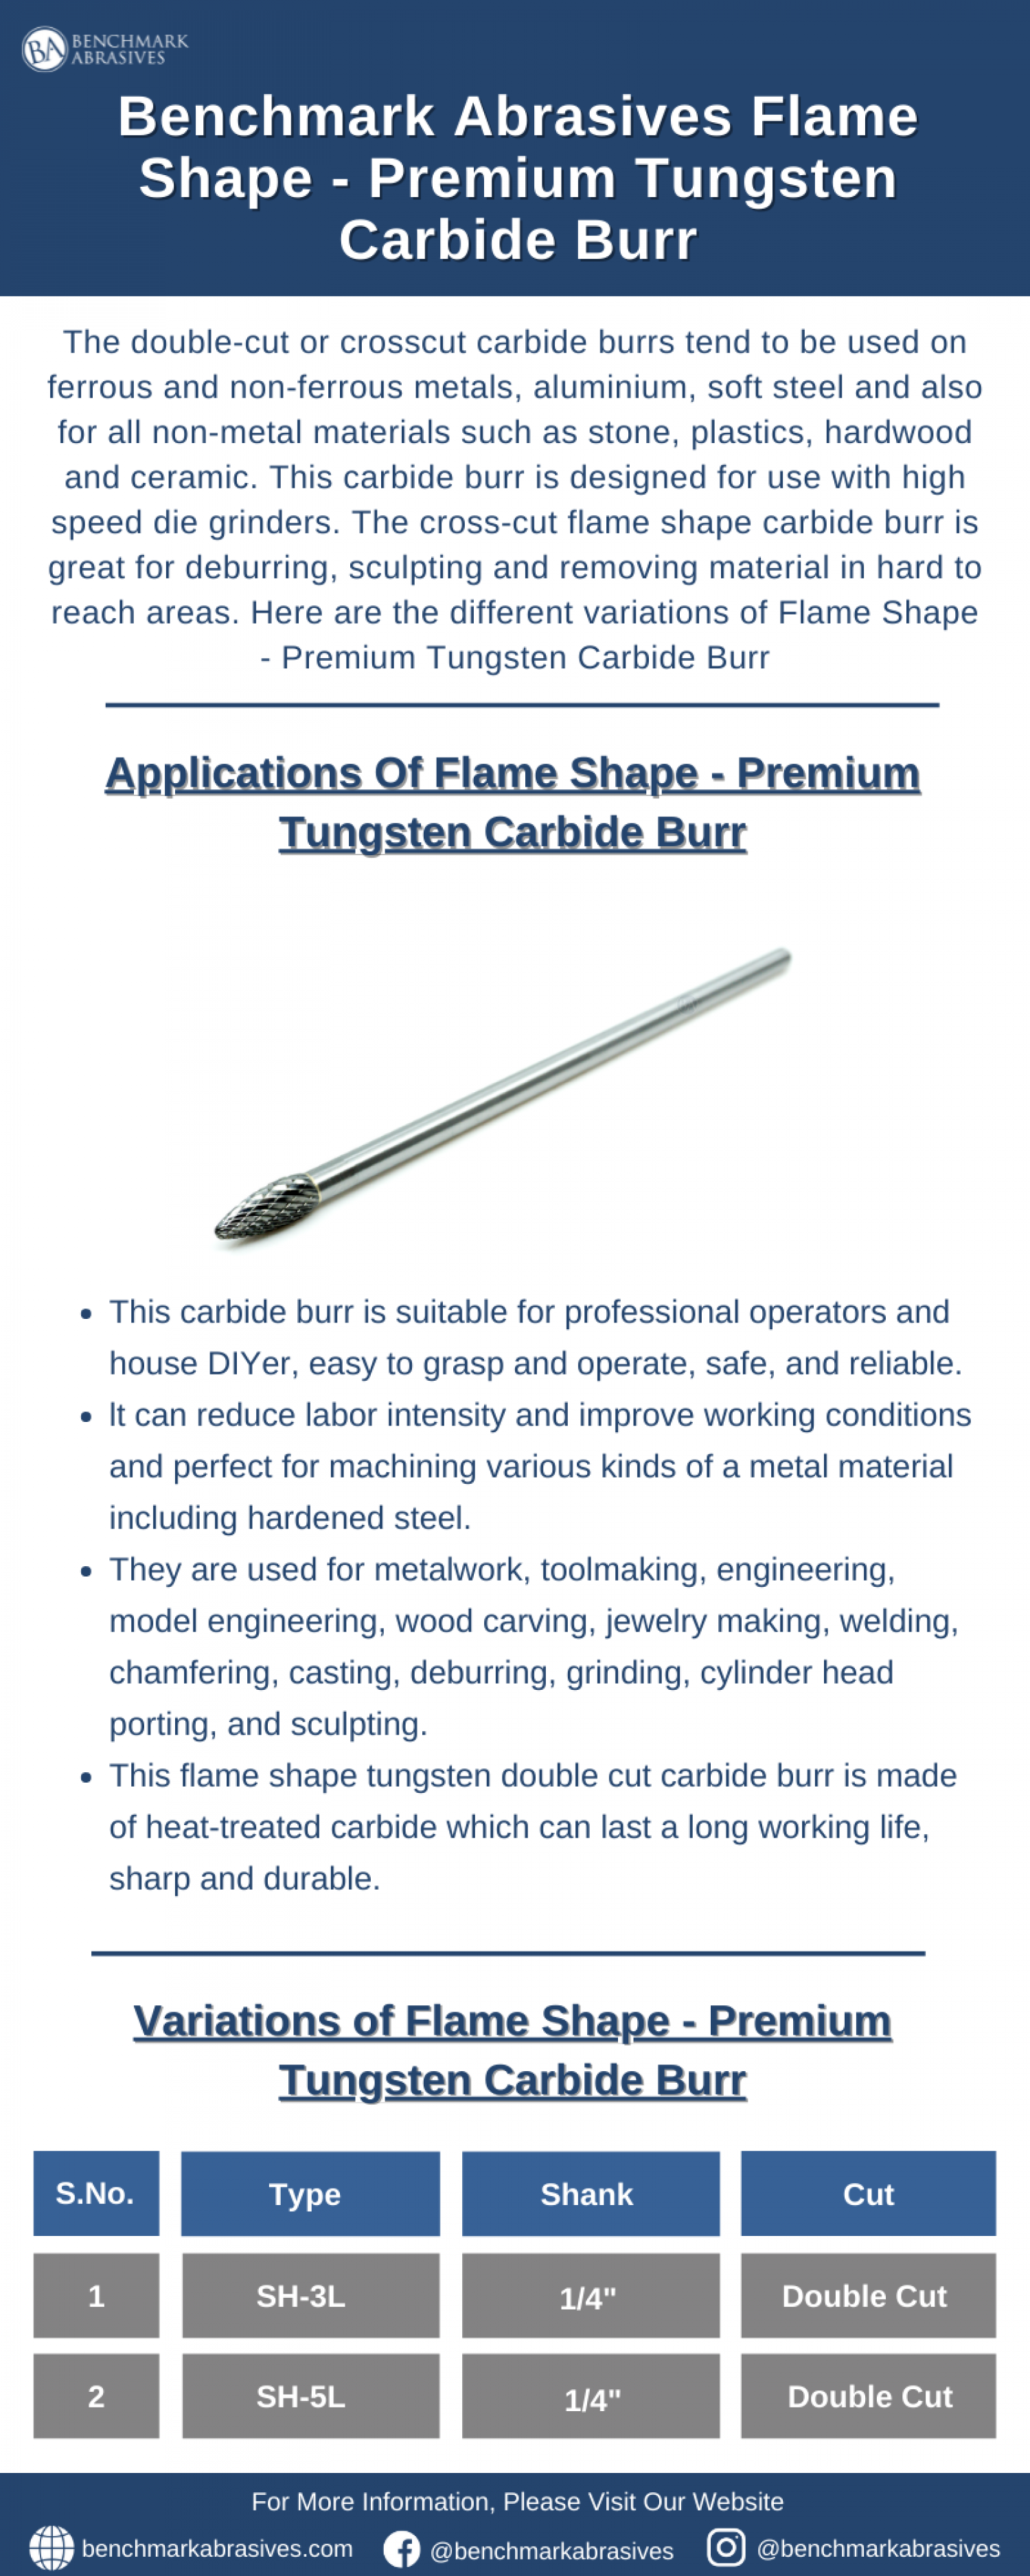 Flame Shape Premium Tungsten Carbide Burr Infographic